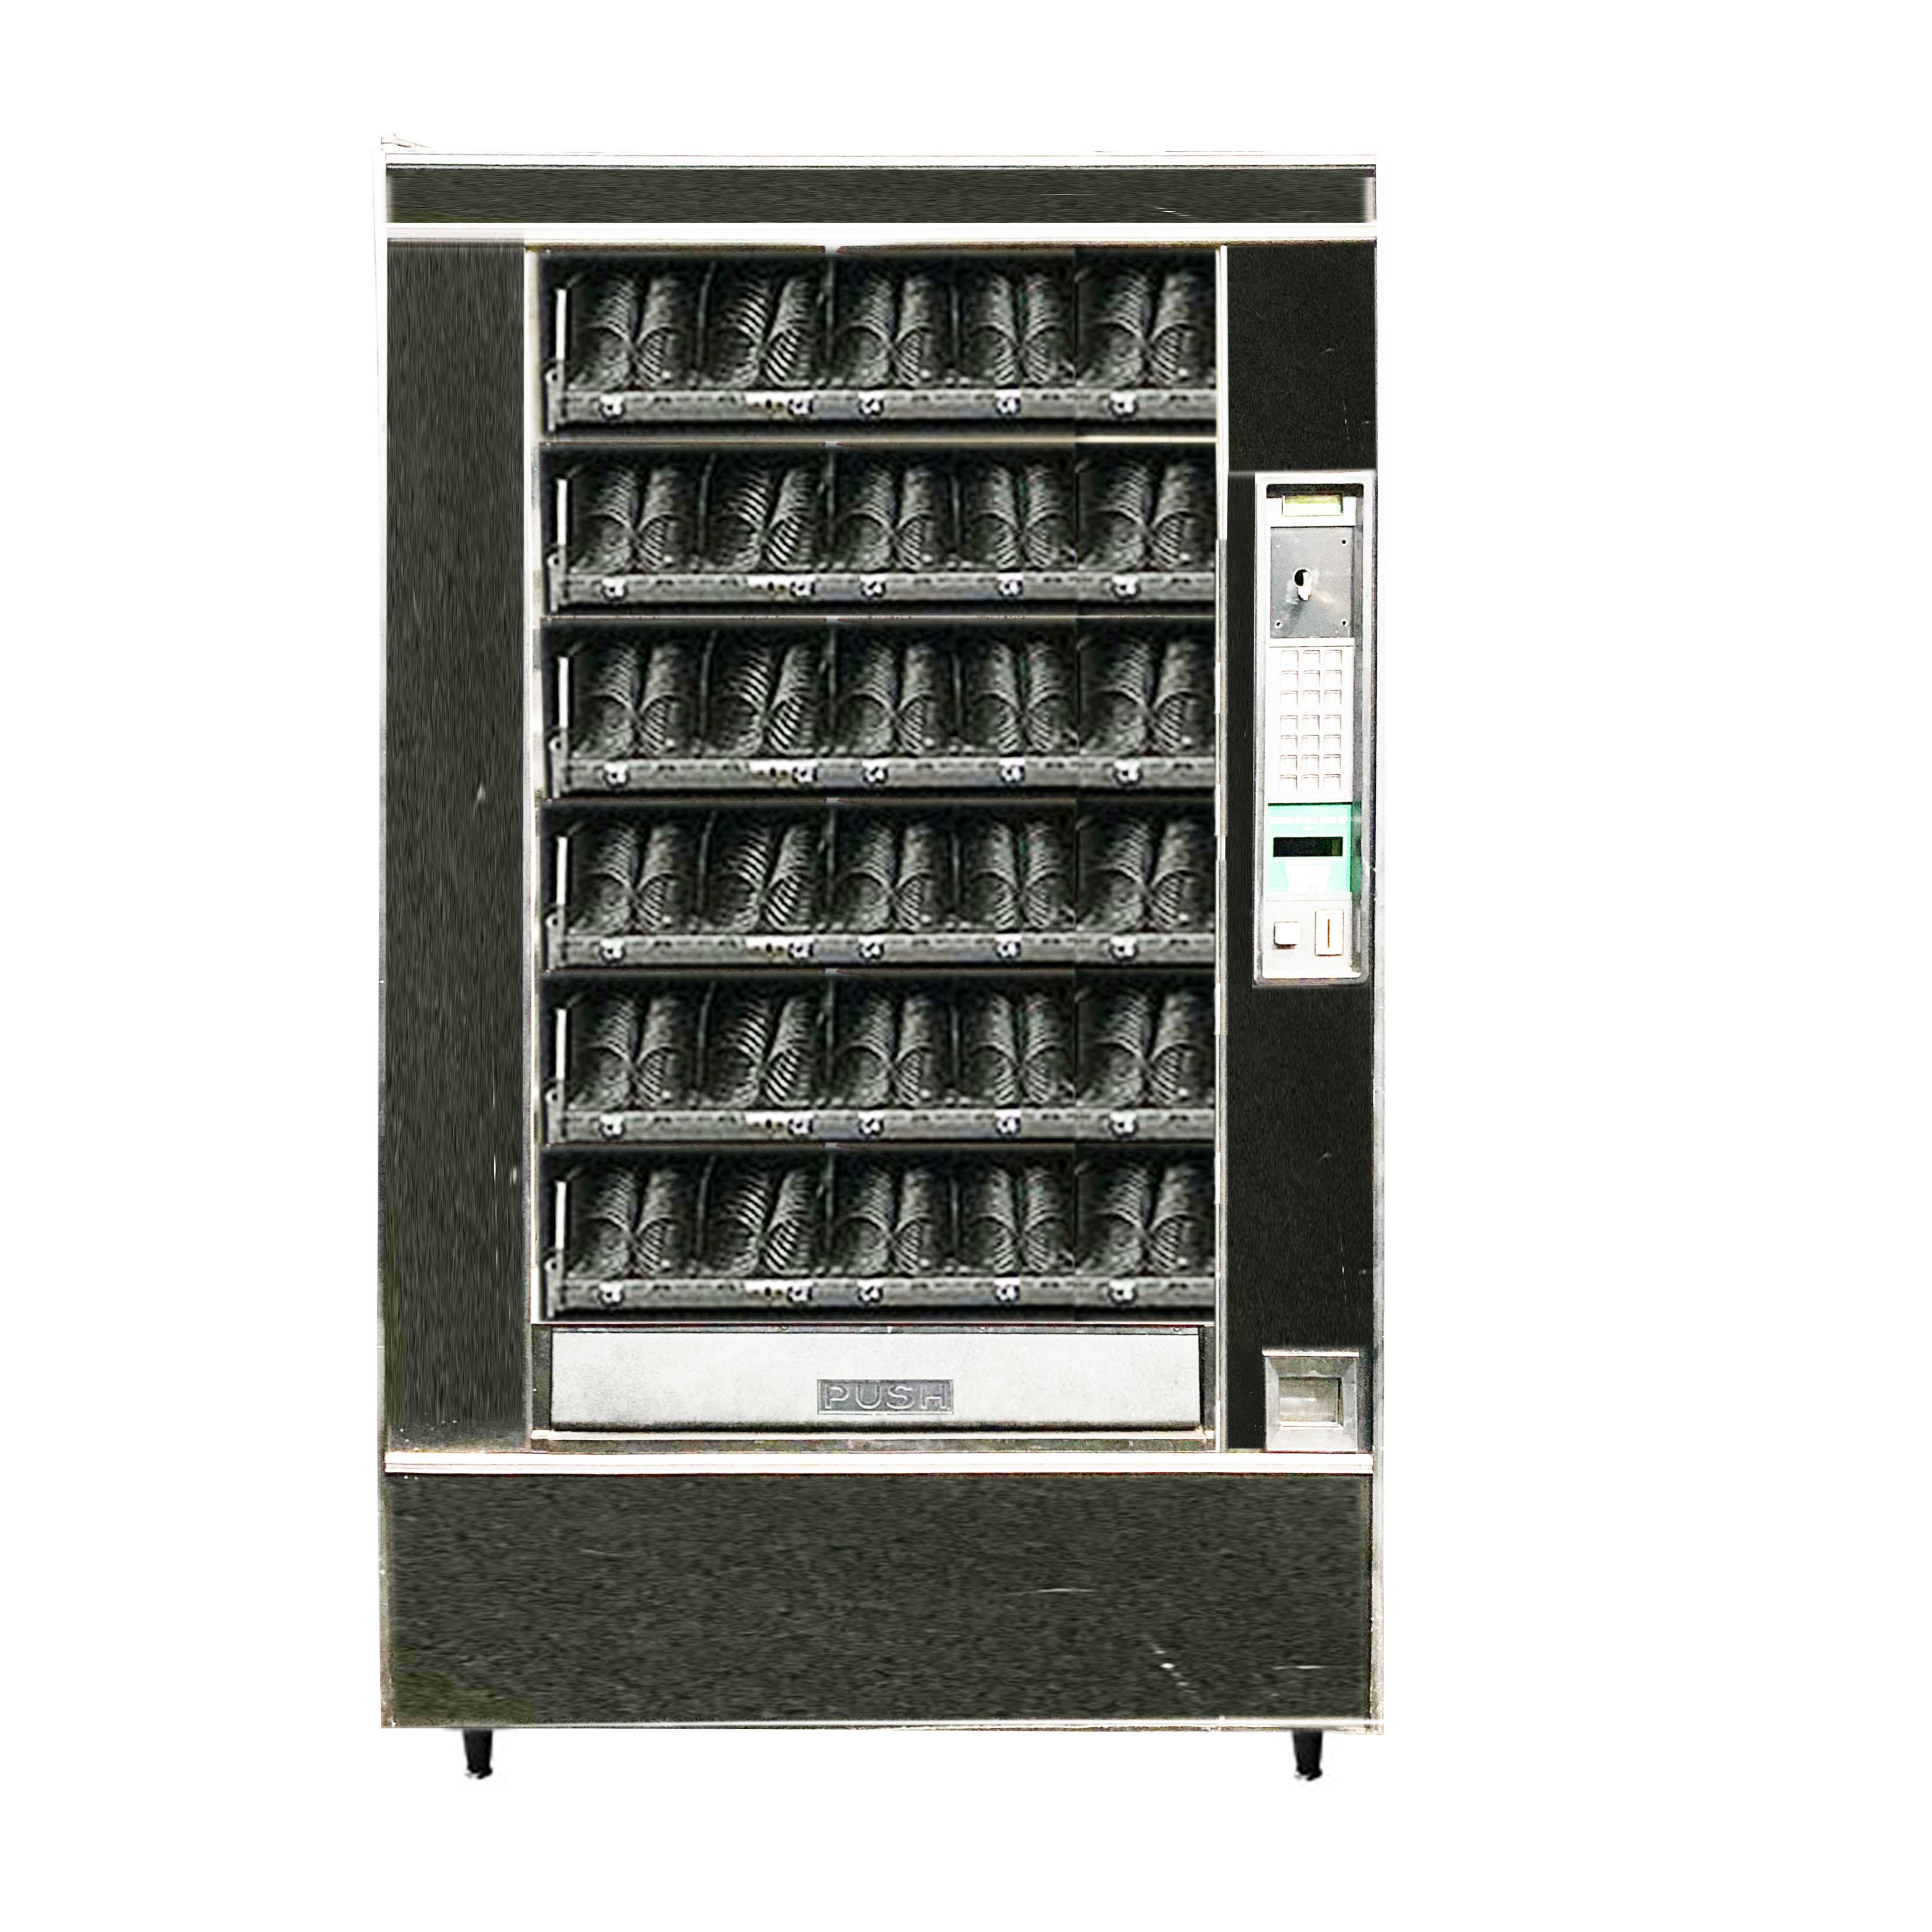 National Snack Vending Machine, 147, Used Vending Machine